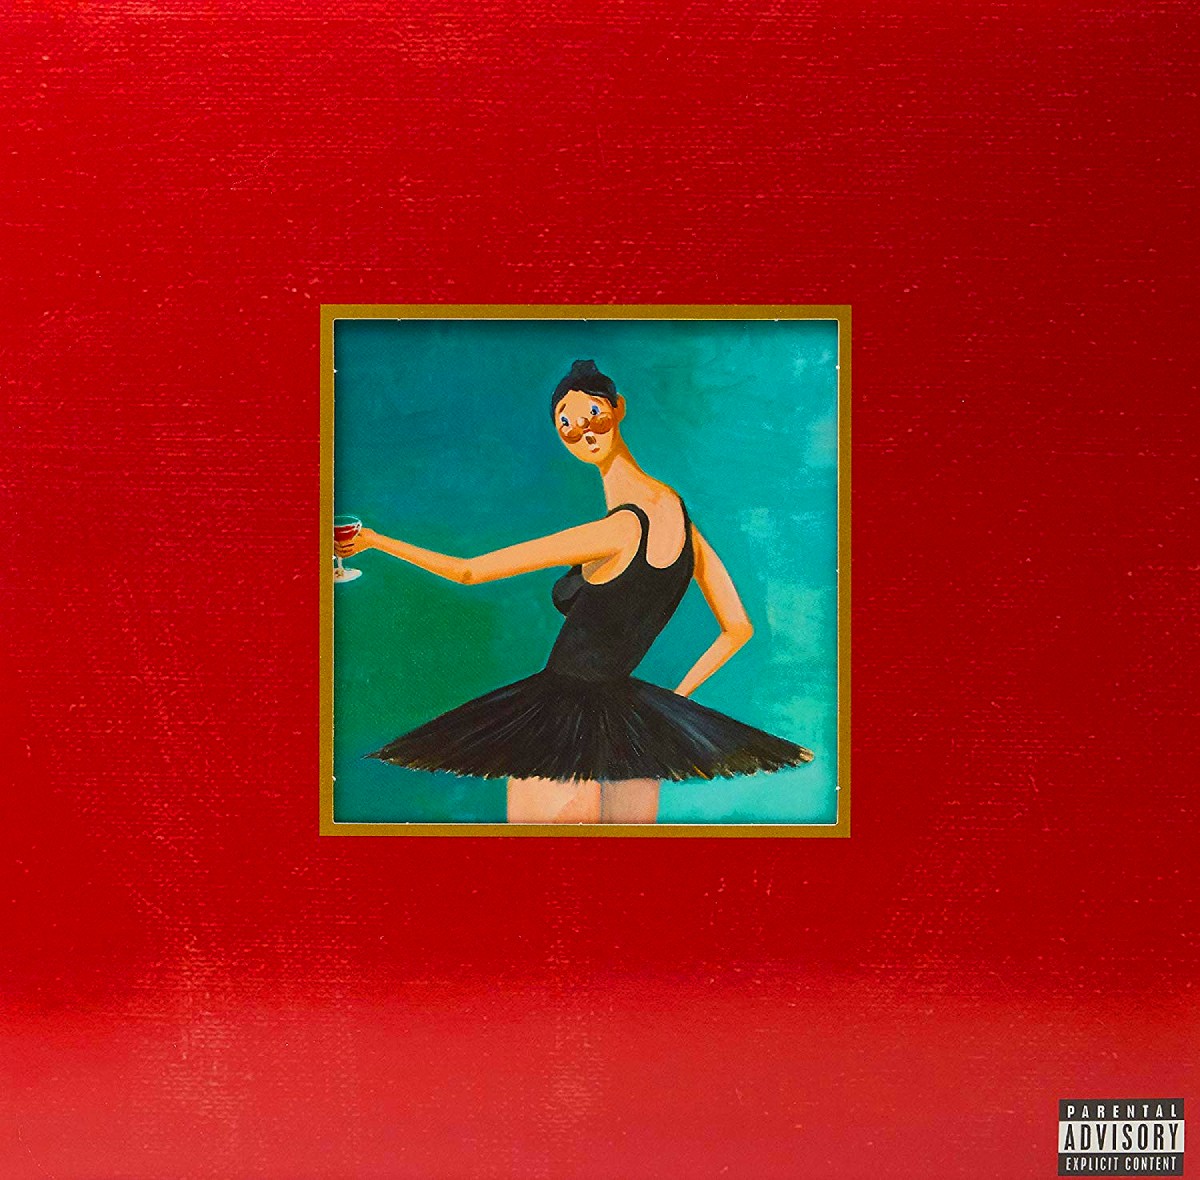 Kanye West, album "My Beautiful Dark Twisted Fantasy"